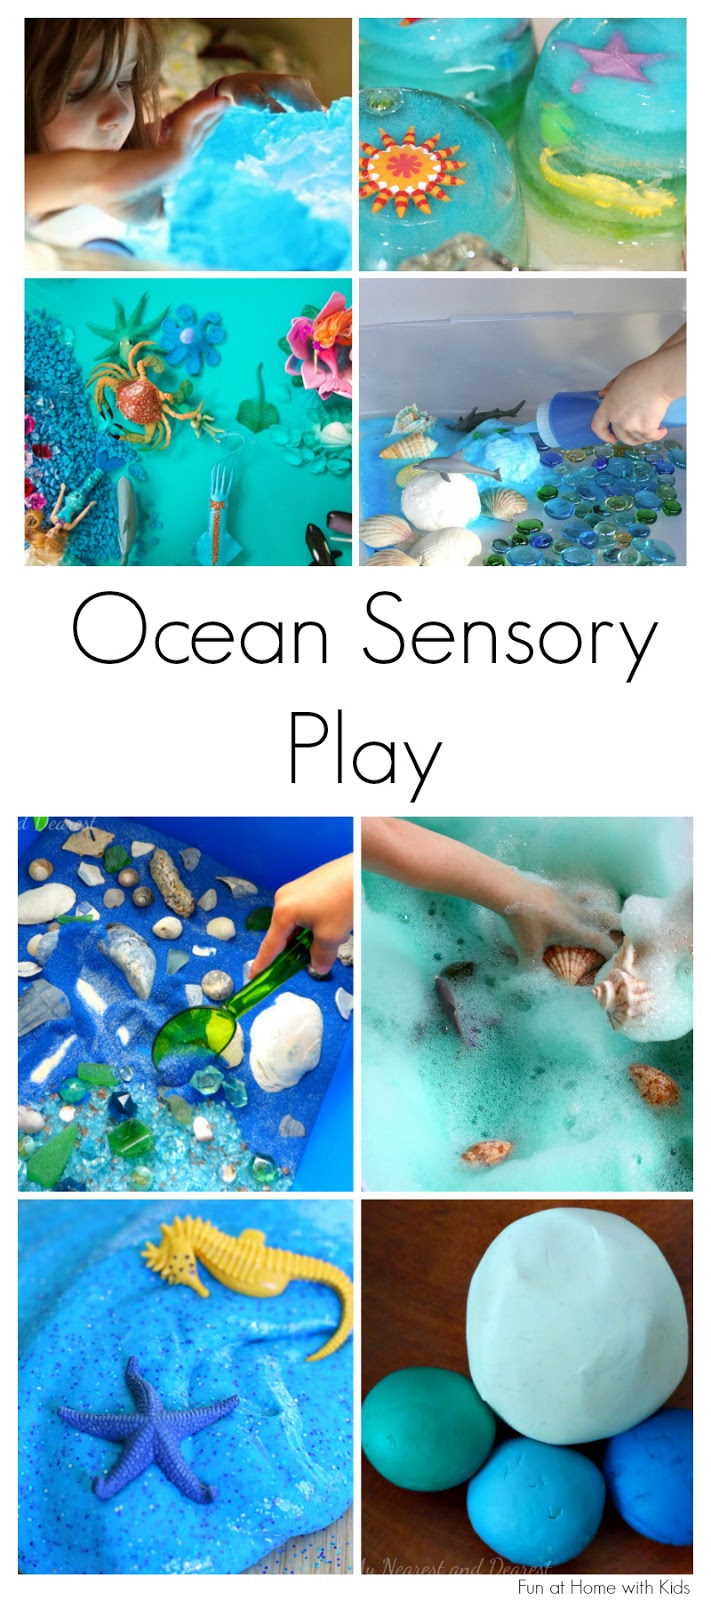 15 Ocean Sensory Play Ideas for Kids